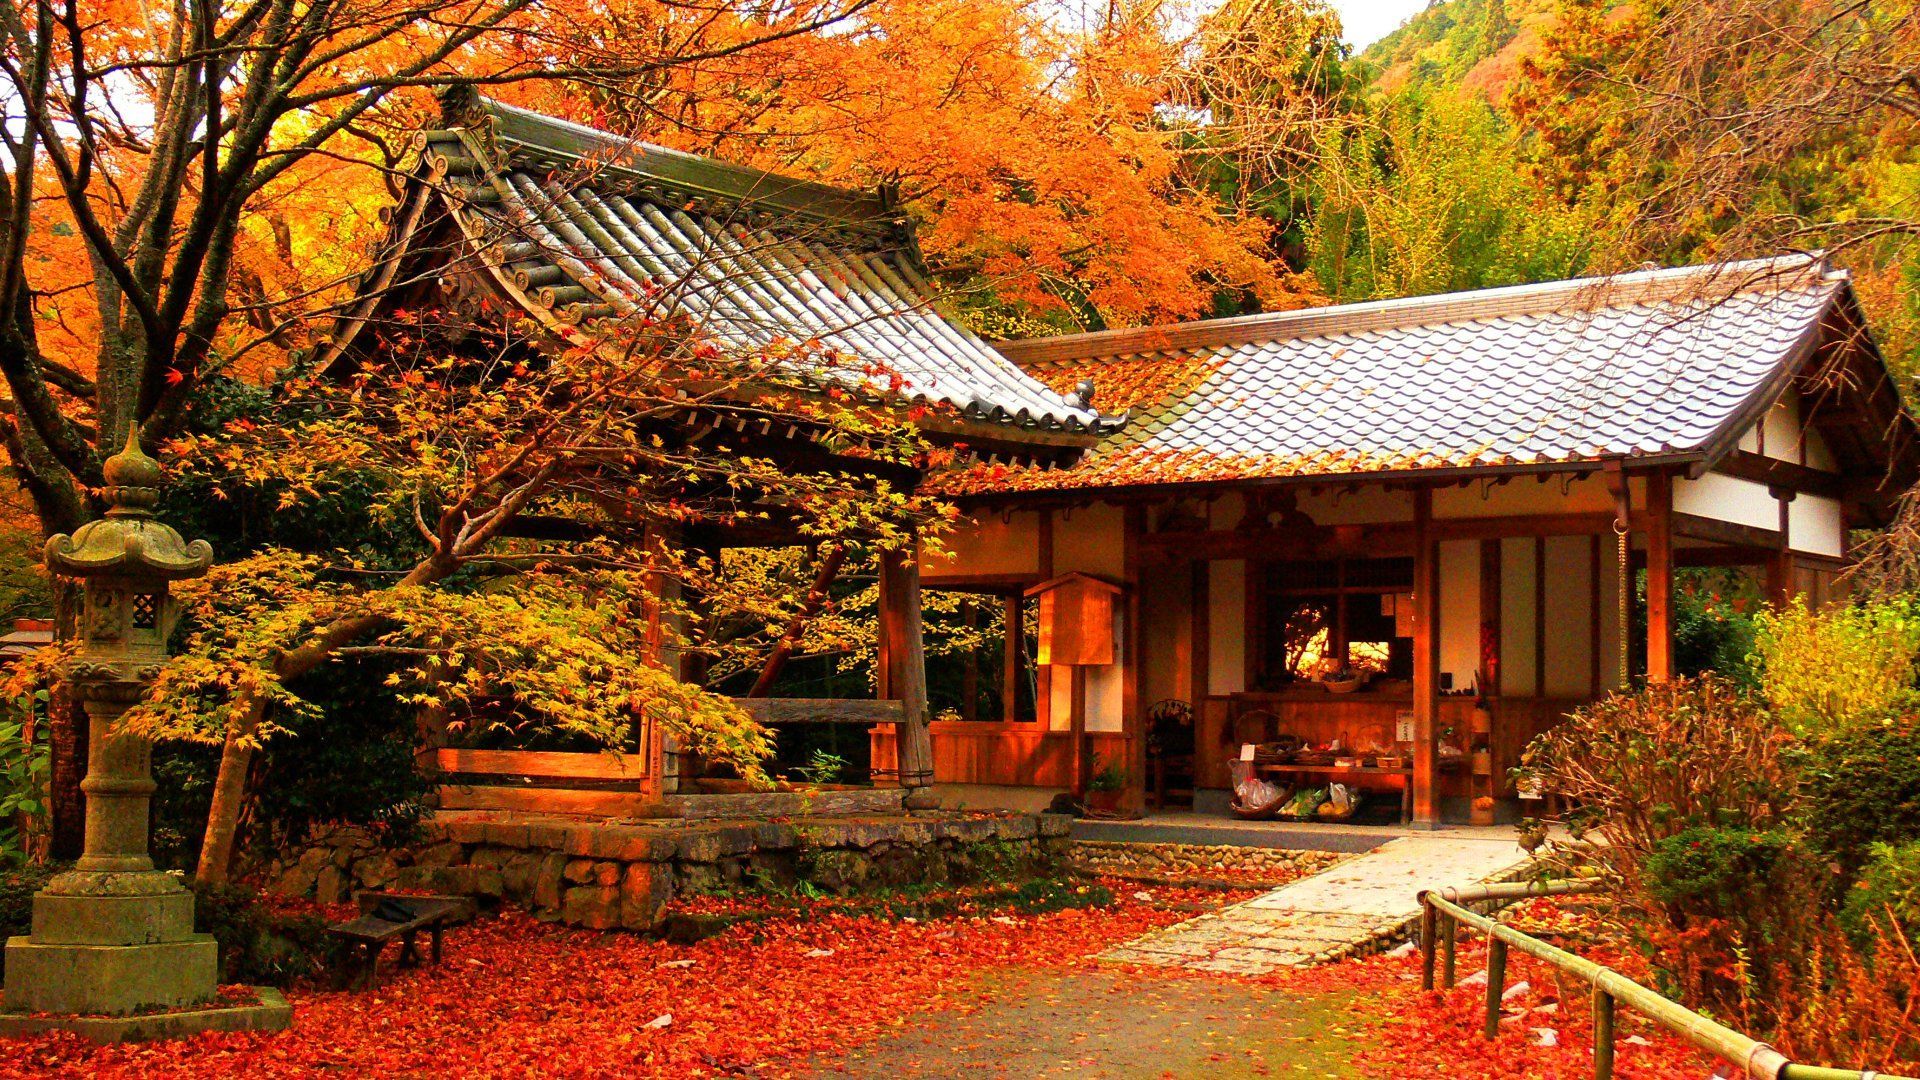 autumn in Japan. Visit japan, Japan travel, Japan